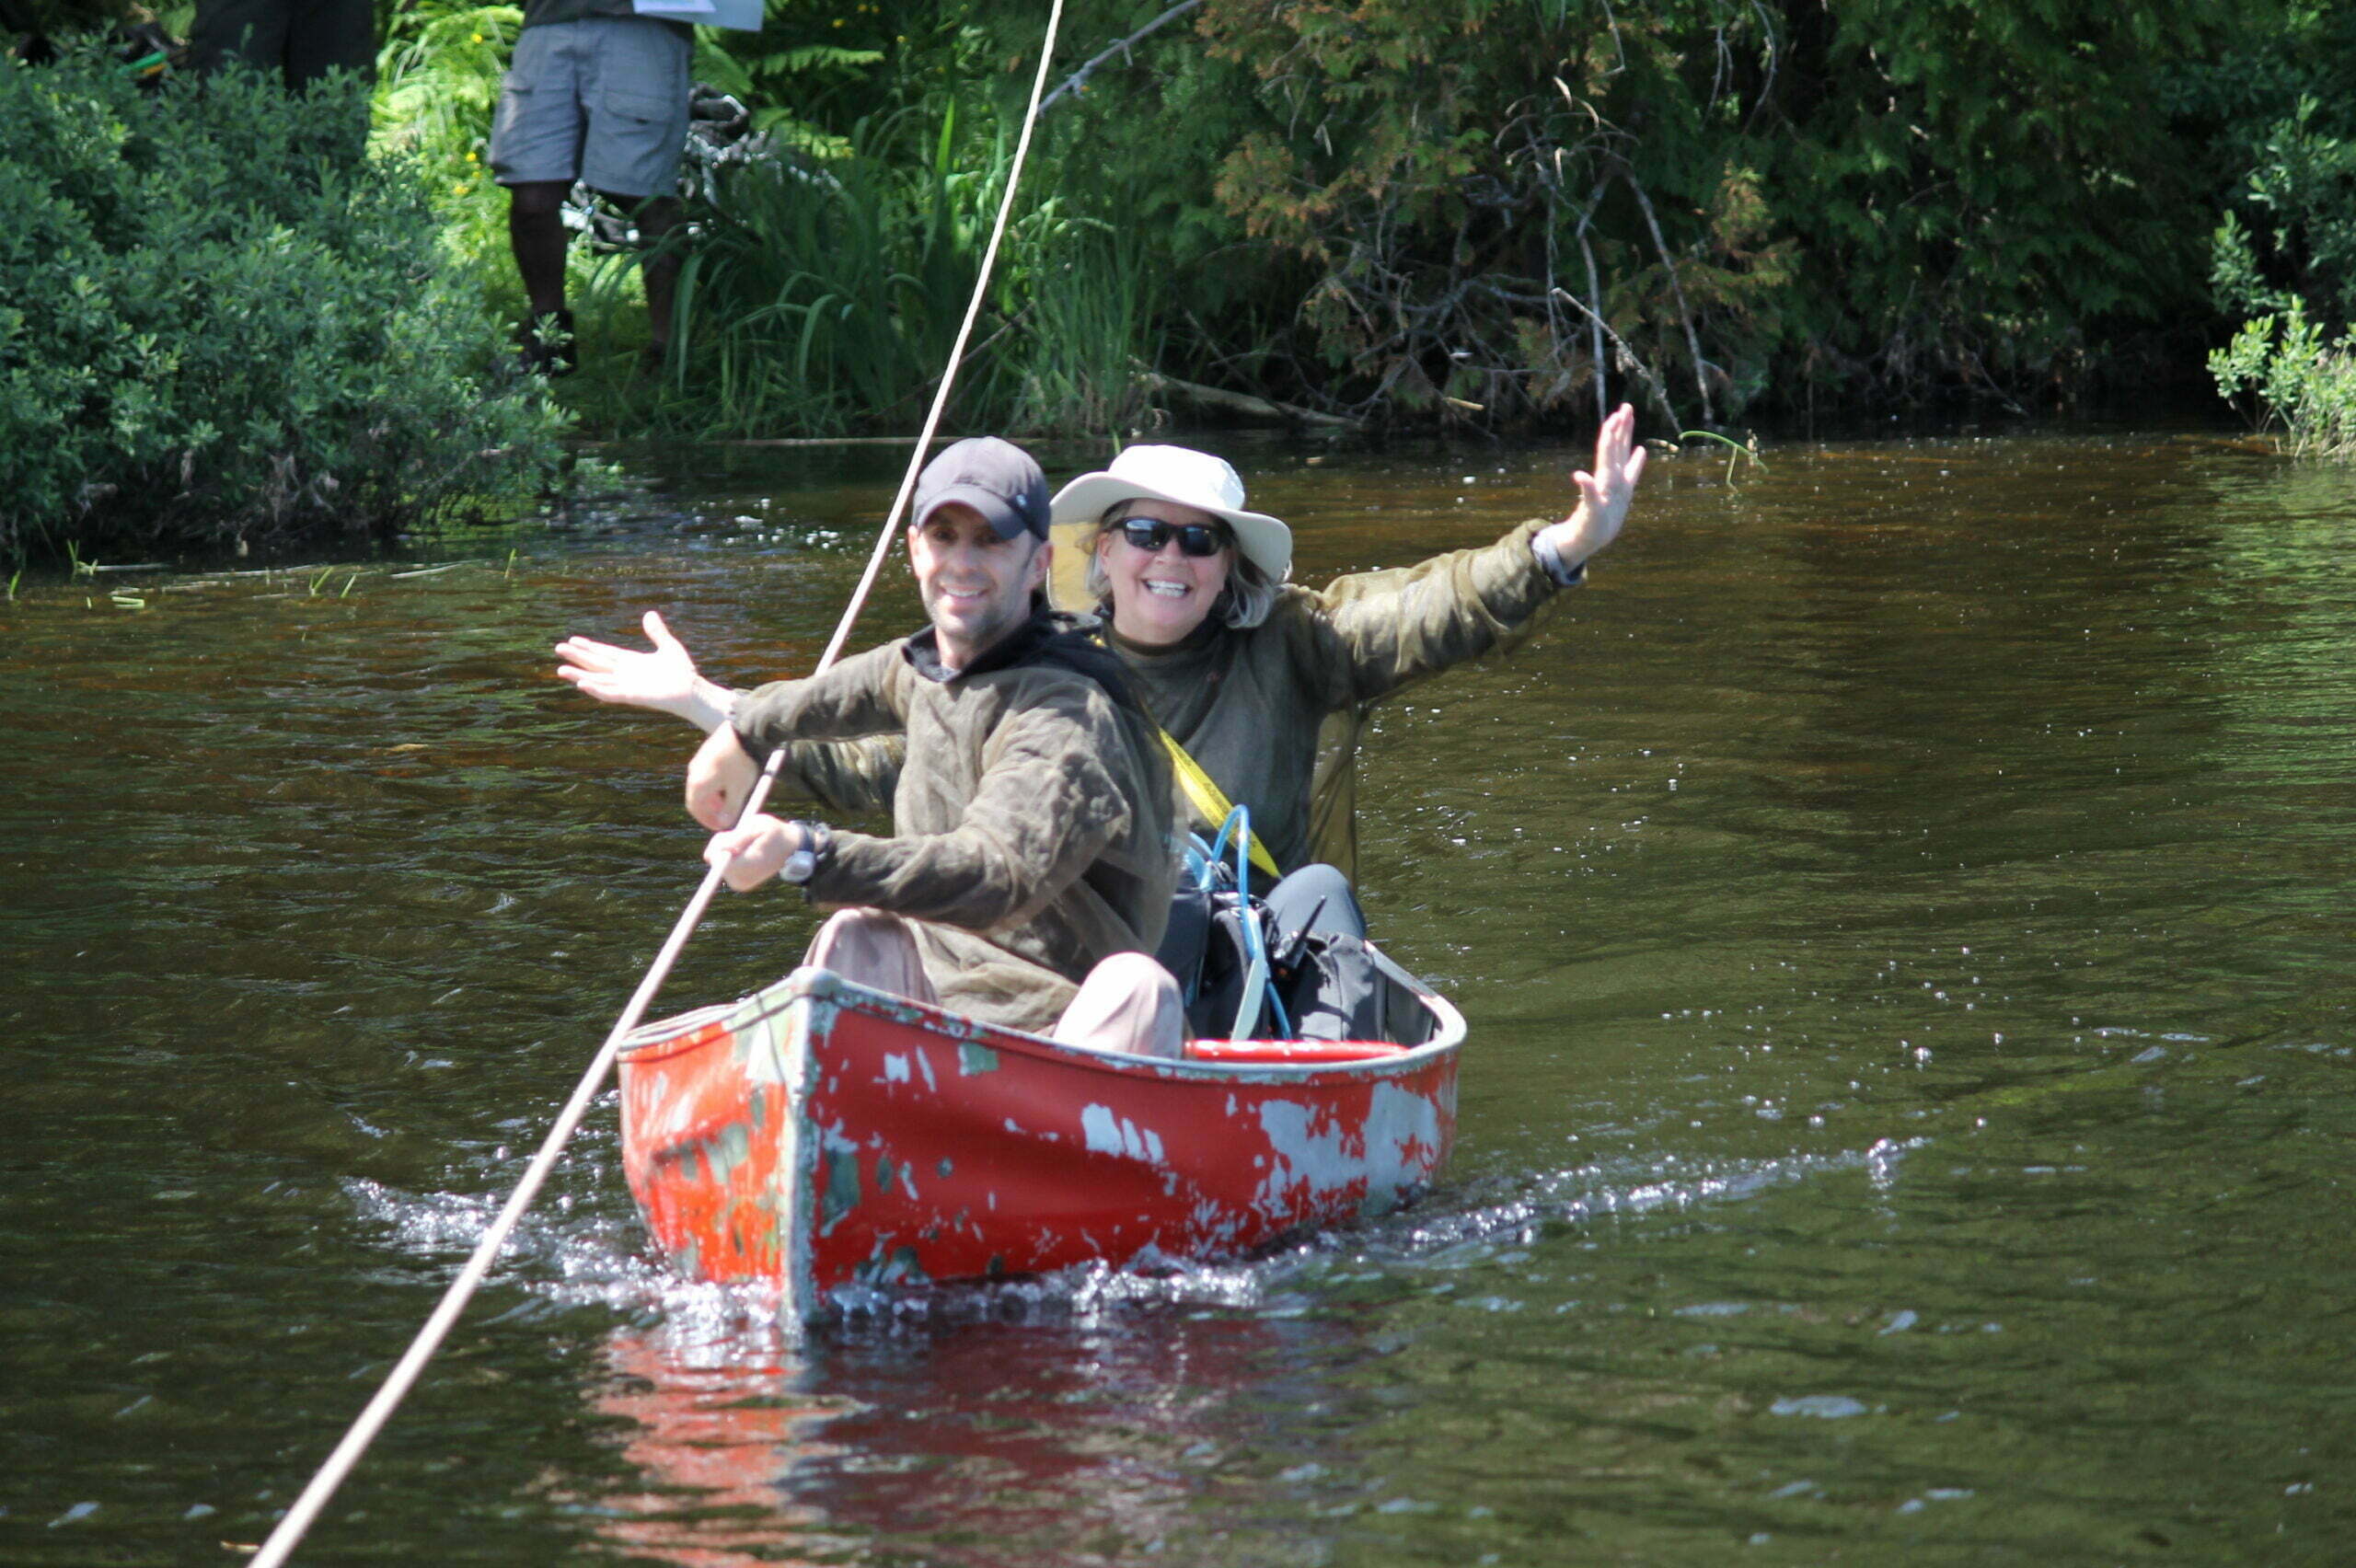 041116-2512-james-river-canoe-paddle-fly-fishing-hunting-Edit